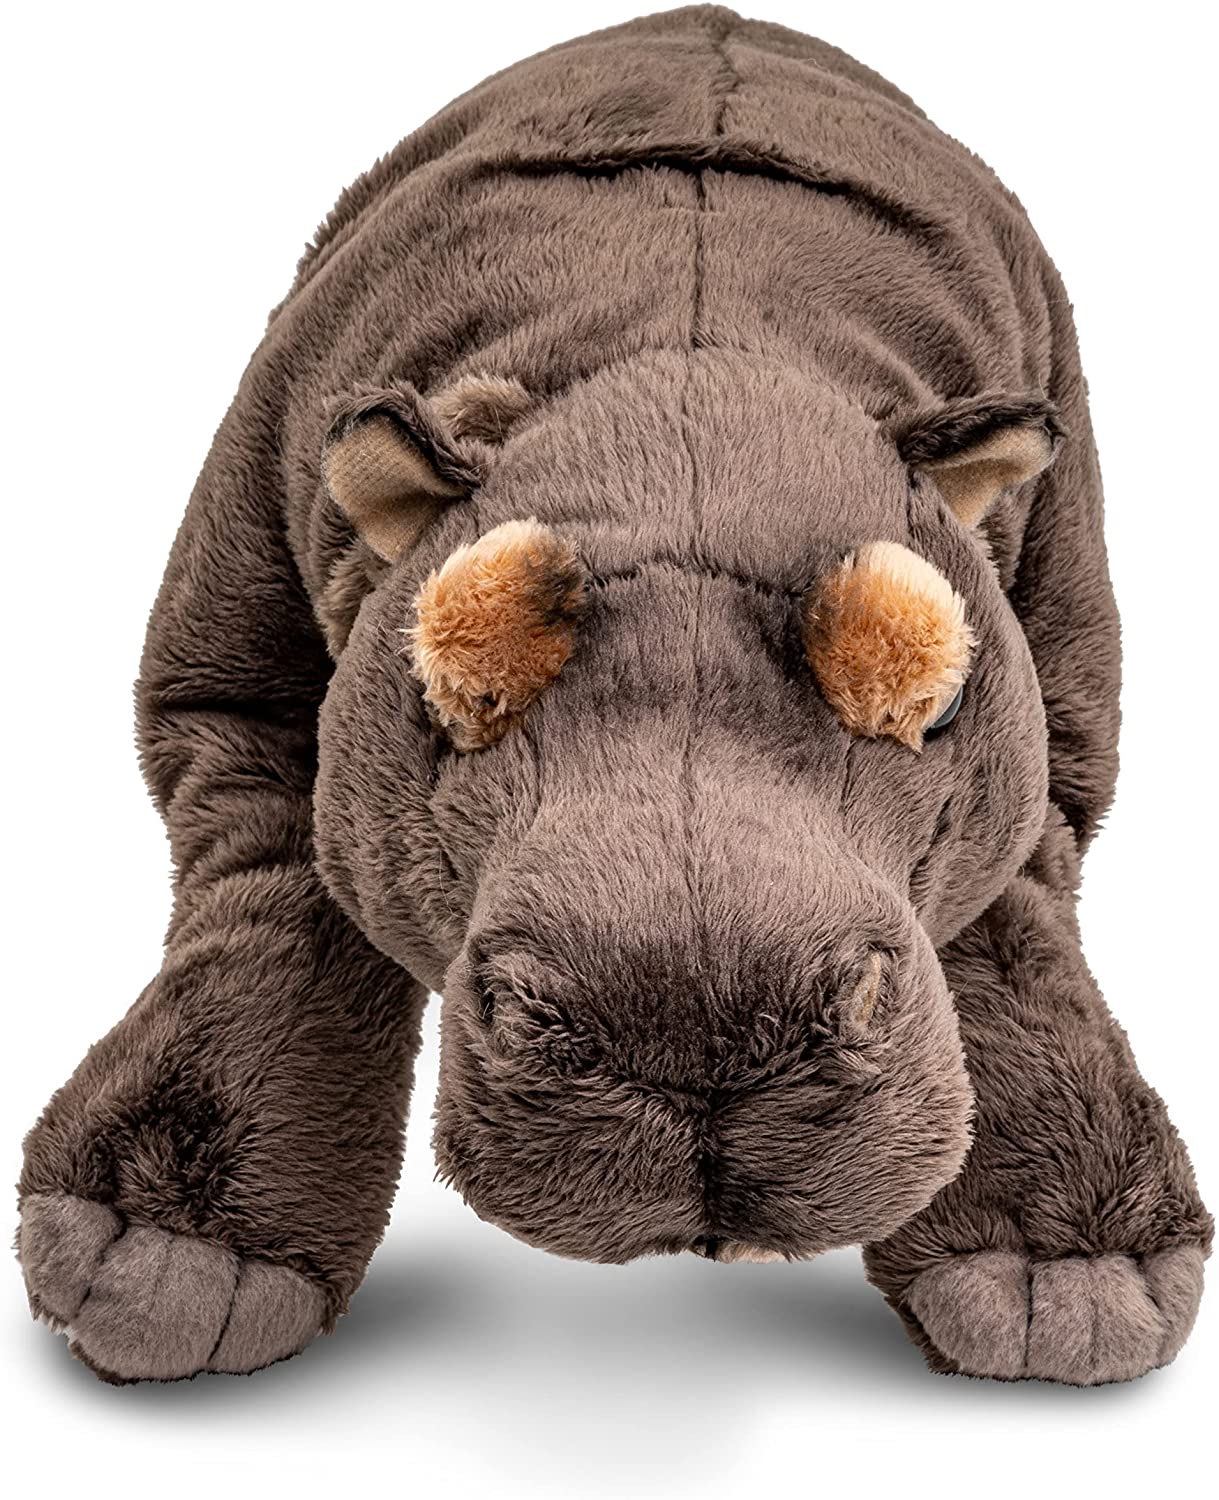 Hippo - large, lying